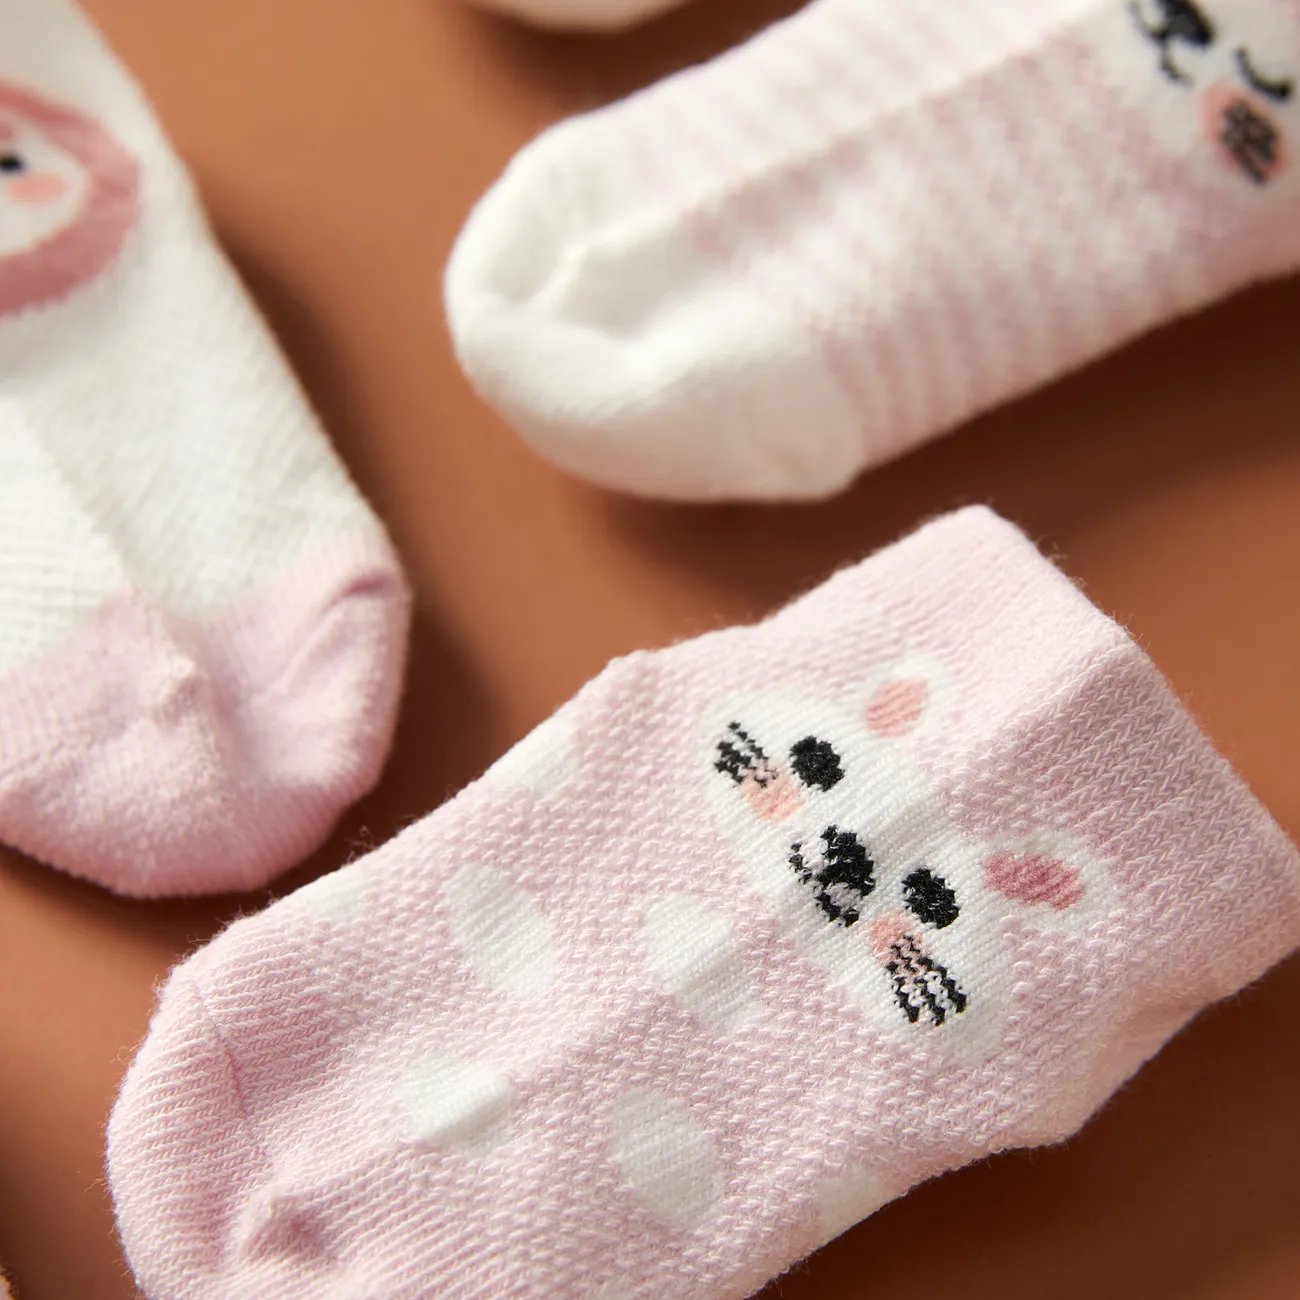 5-pack Baby / Toddler / Kid Animal Solid Socks Pink big image 1